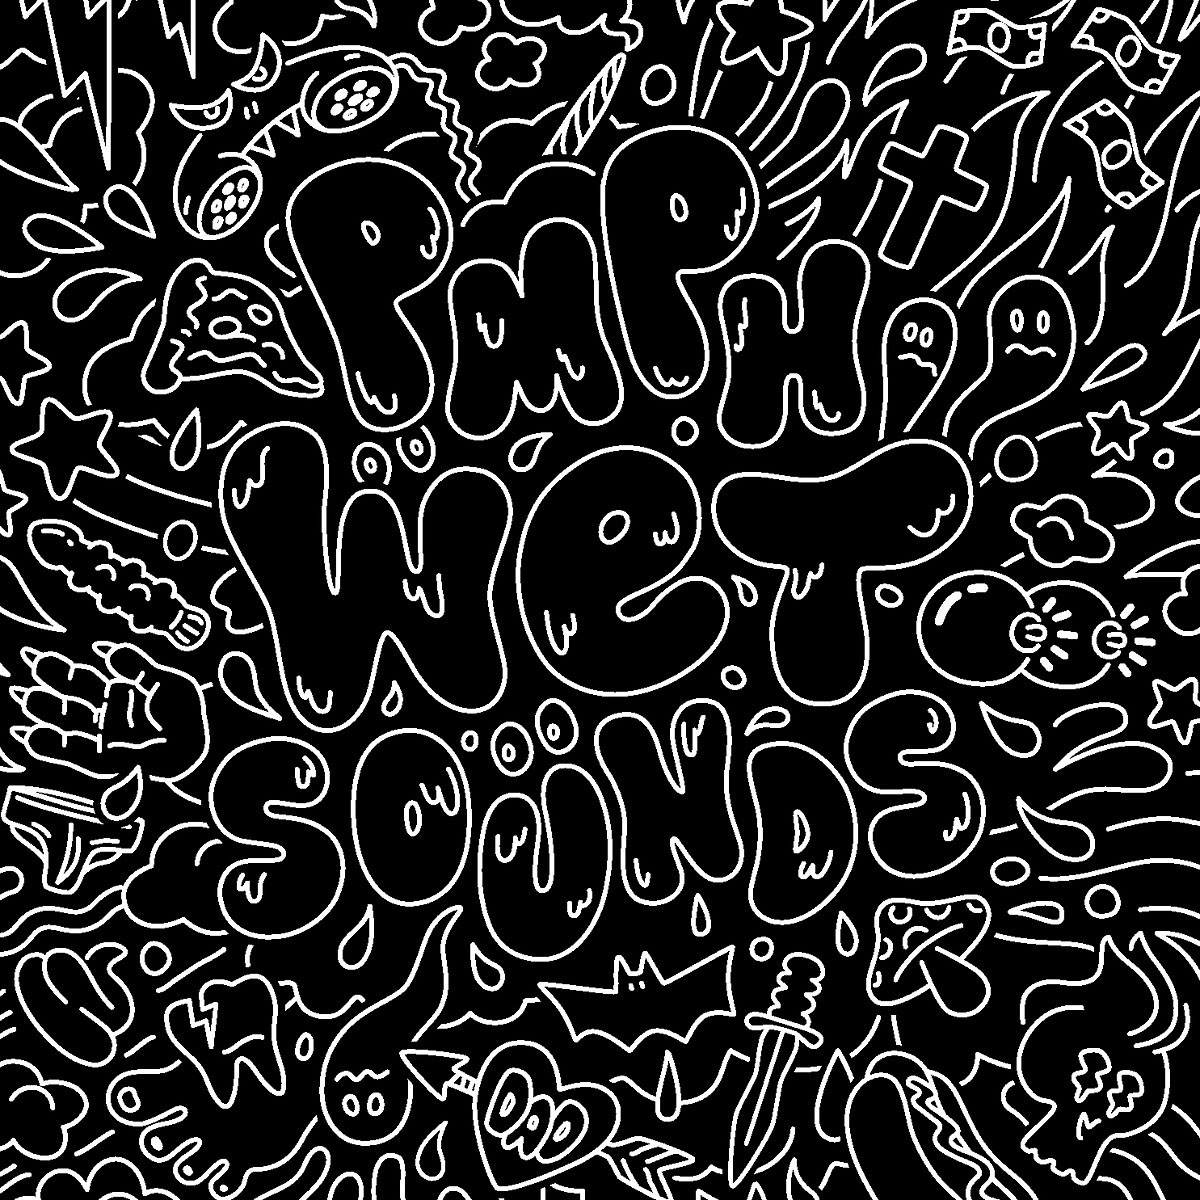 Partman Parthorse, Wet Sounds (1/18, ggnzla Records, ggnzla.bandcamp.com) Next to Fly Moon